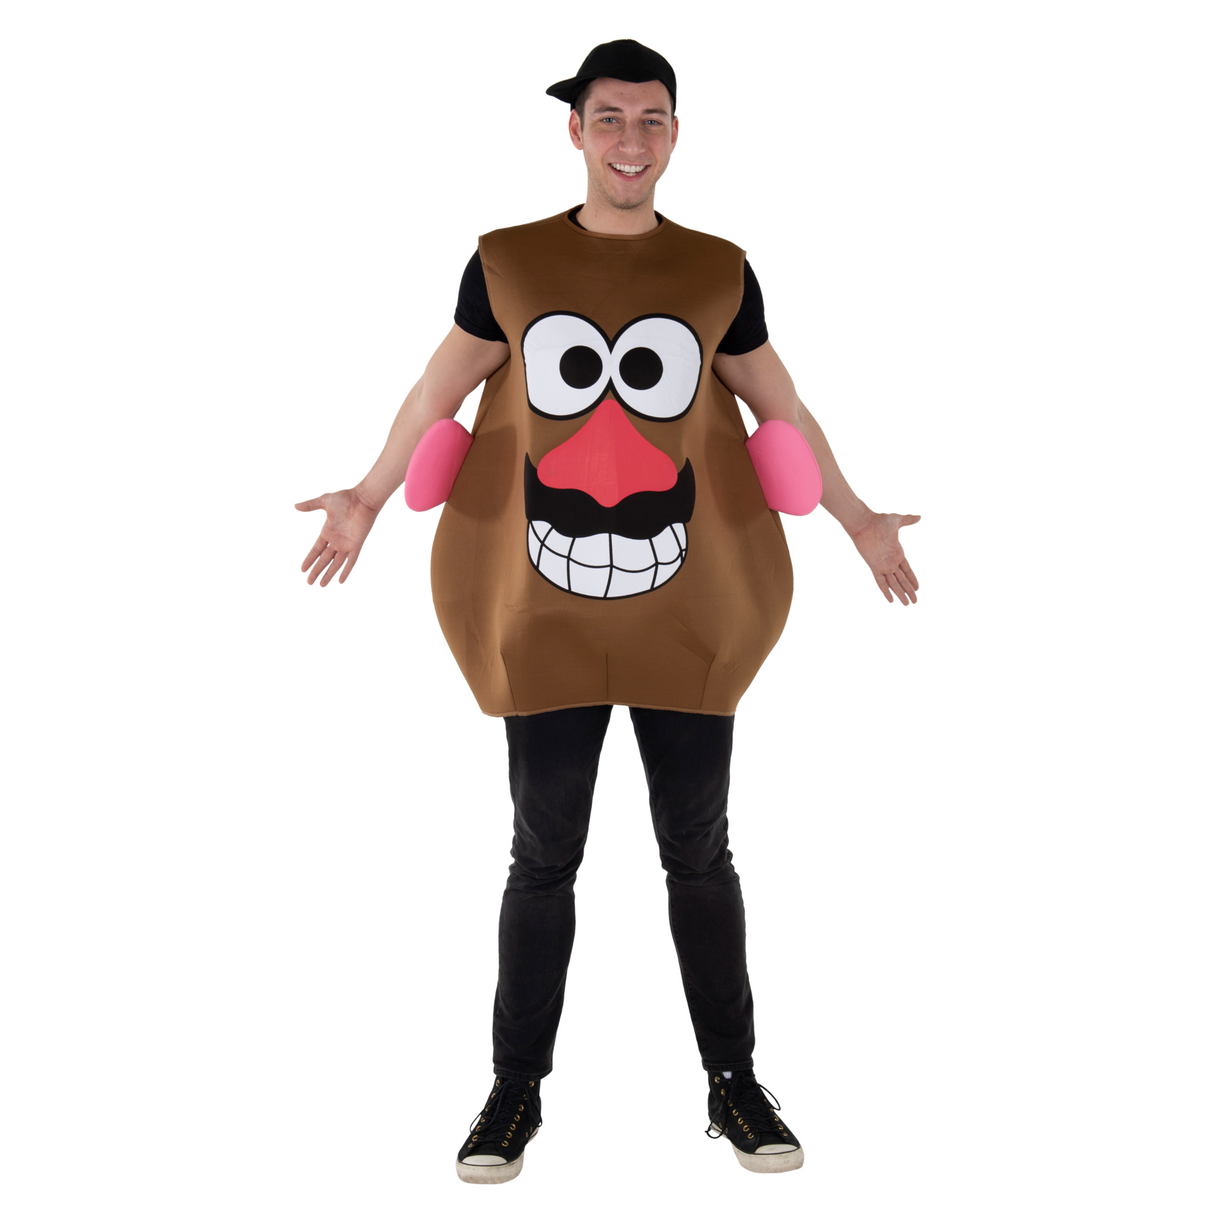 Mr. Potato Costume - Adults